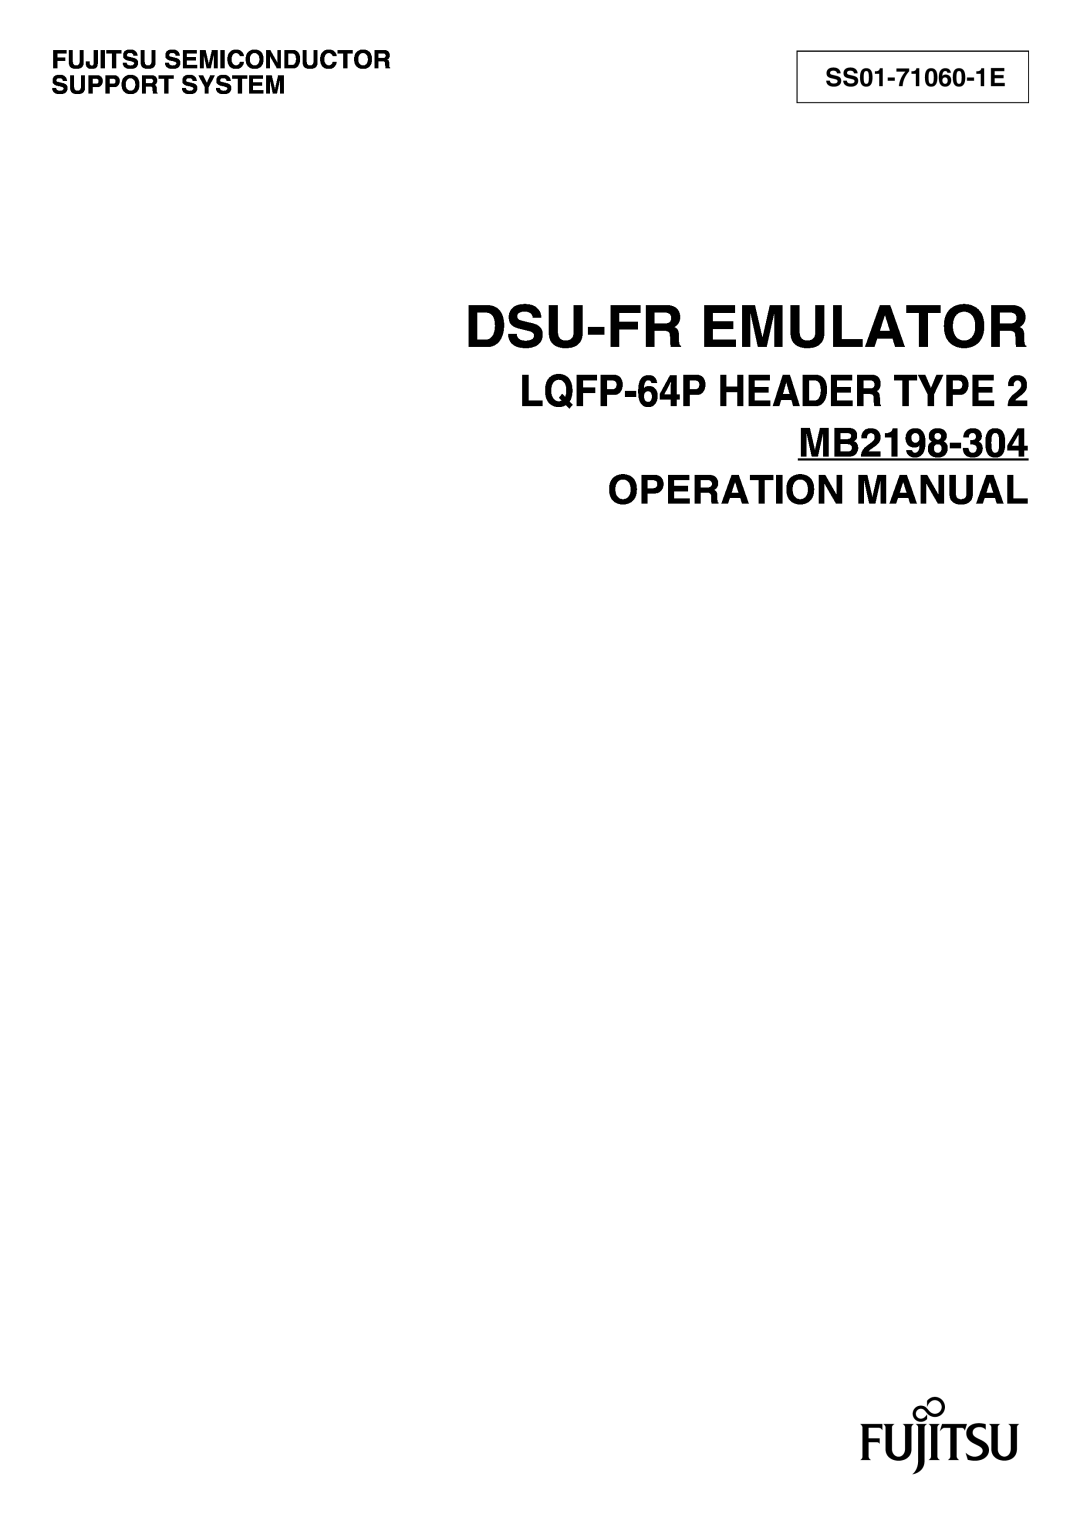 Fujitsu operation manual SS01-71060-1E, Dsu-Fr Emulator, LQFP-64P HEADER TYPE, Fujitsu Semiconductor Support System 